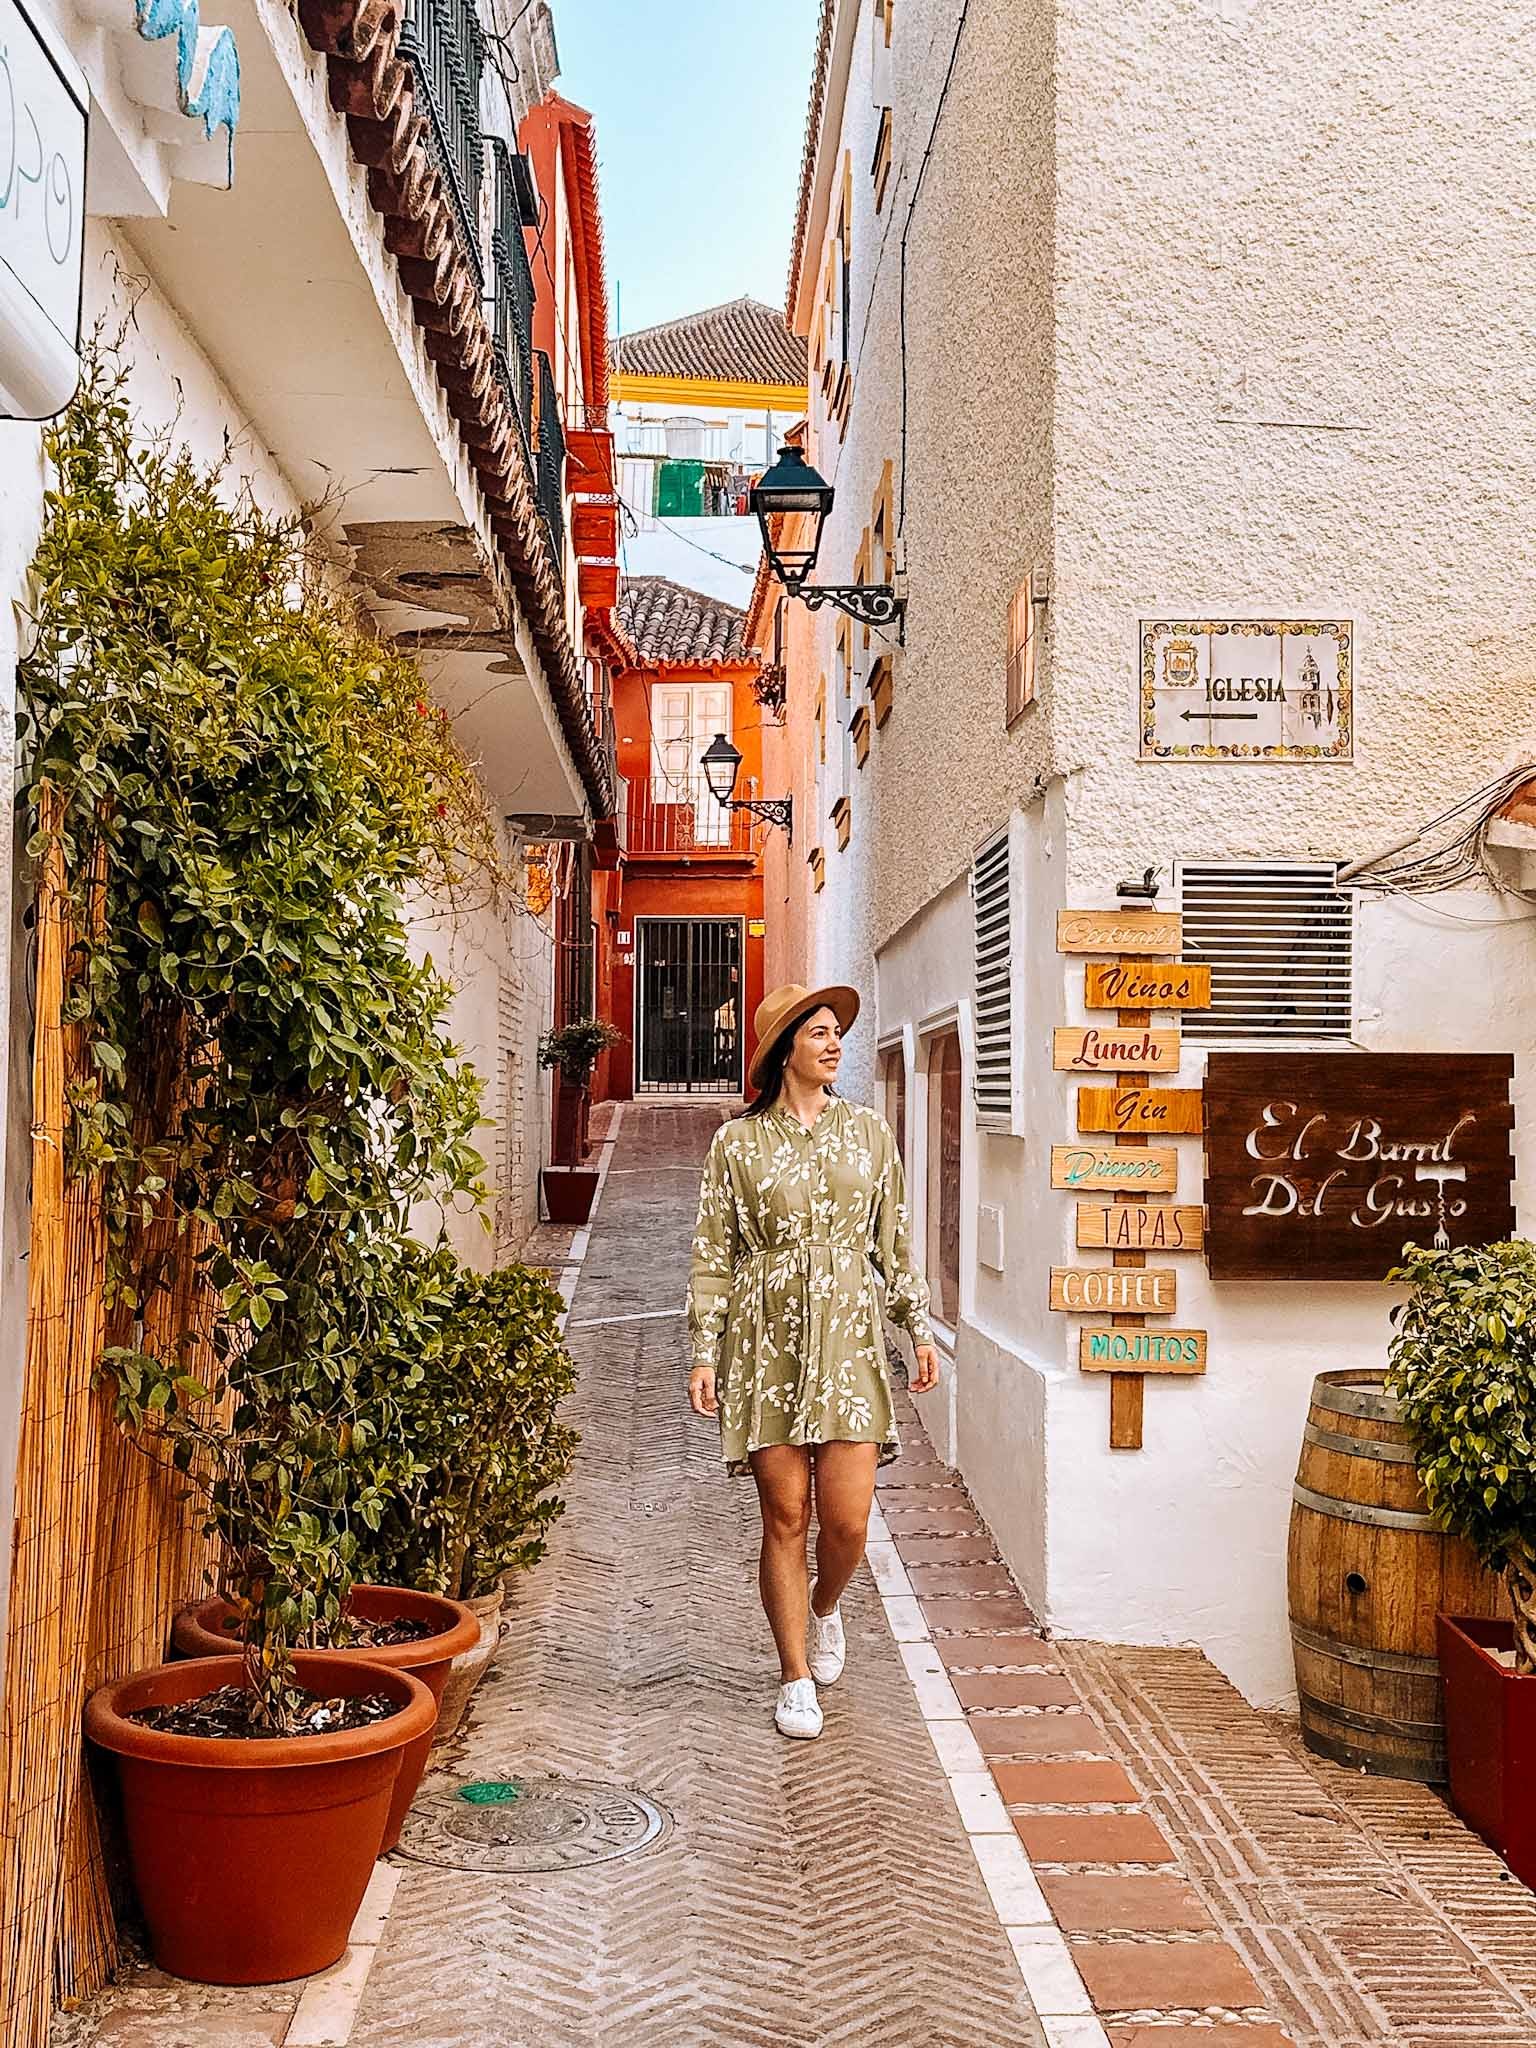 Most beautiful streets in Marbella, Spain - Calle Gloria